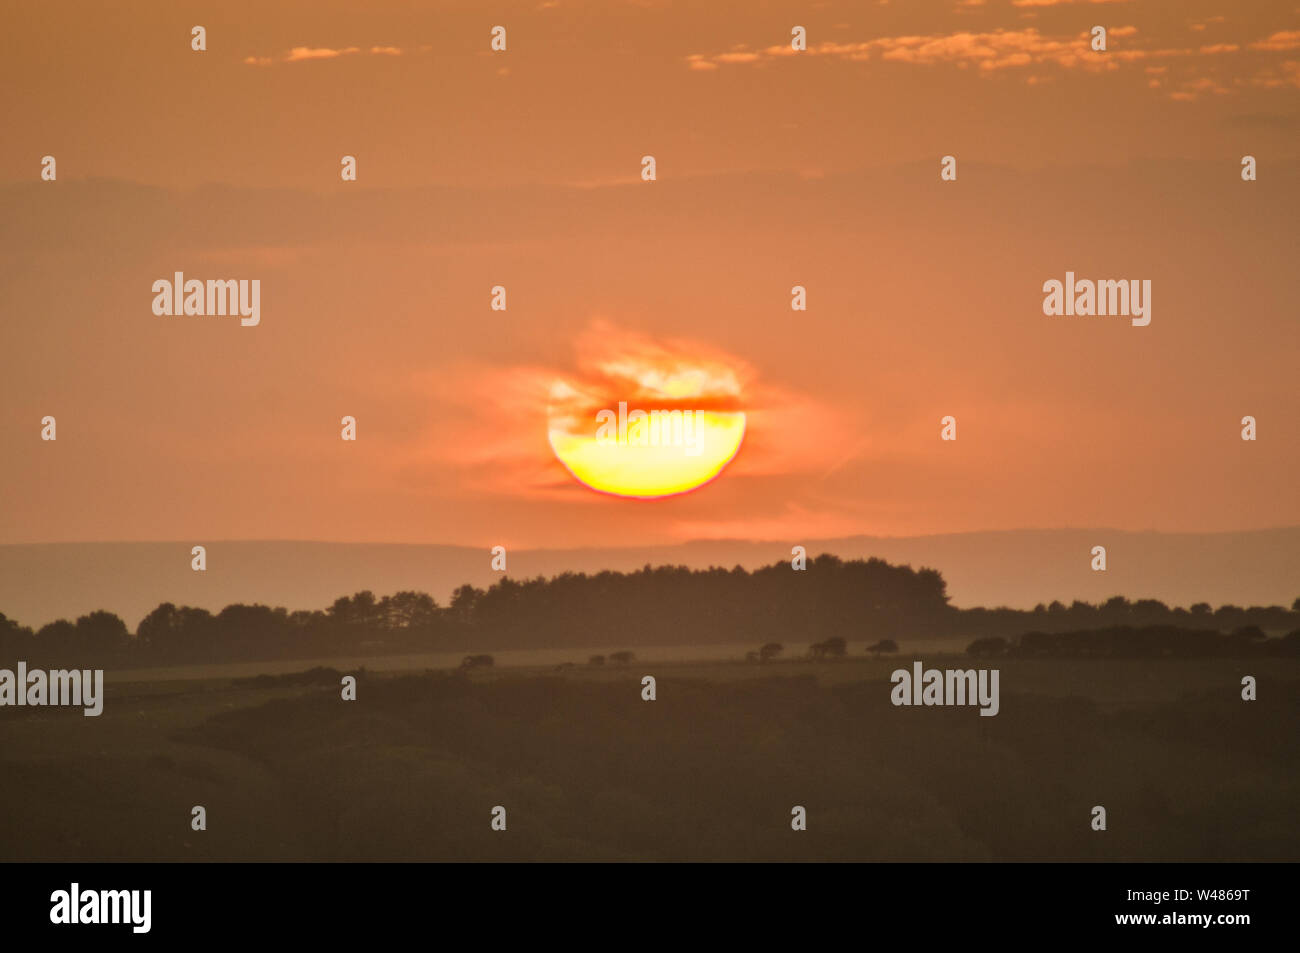 Eastbourne, East Sussex, Großbritannien. Juli 2019..Glorious Sunset Sequence over the misty countryside as Sun dips behind Cloud to reerscheint Minuten später on Horizon. Zwei Sonnenuntergänge an einem Tag. . Stockfoto